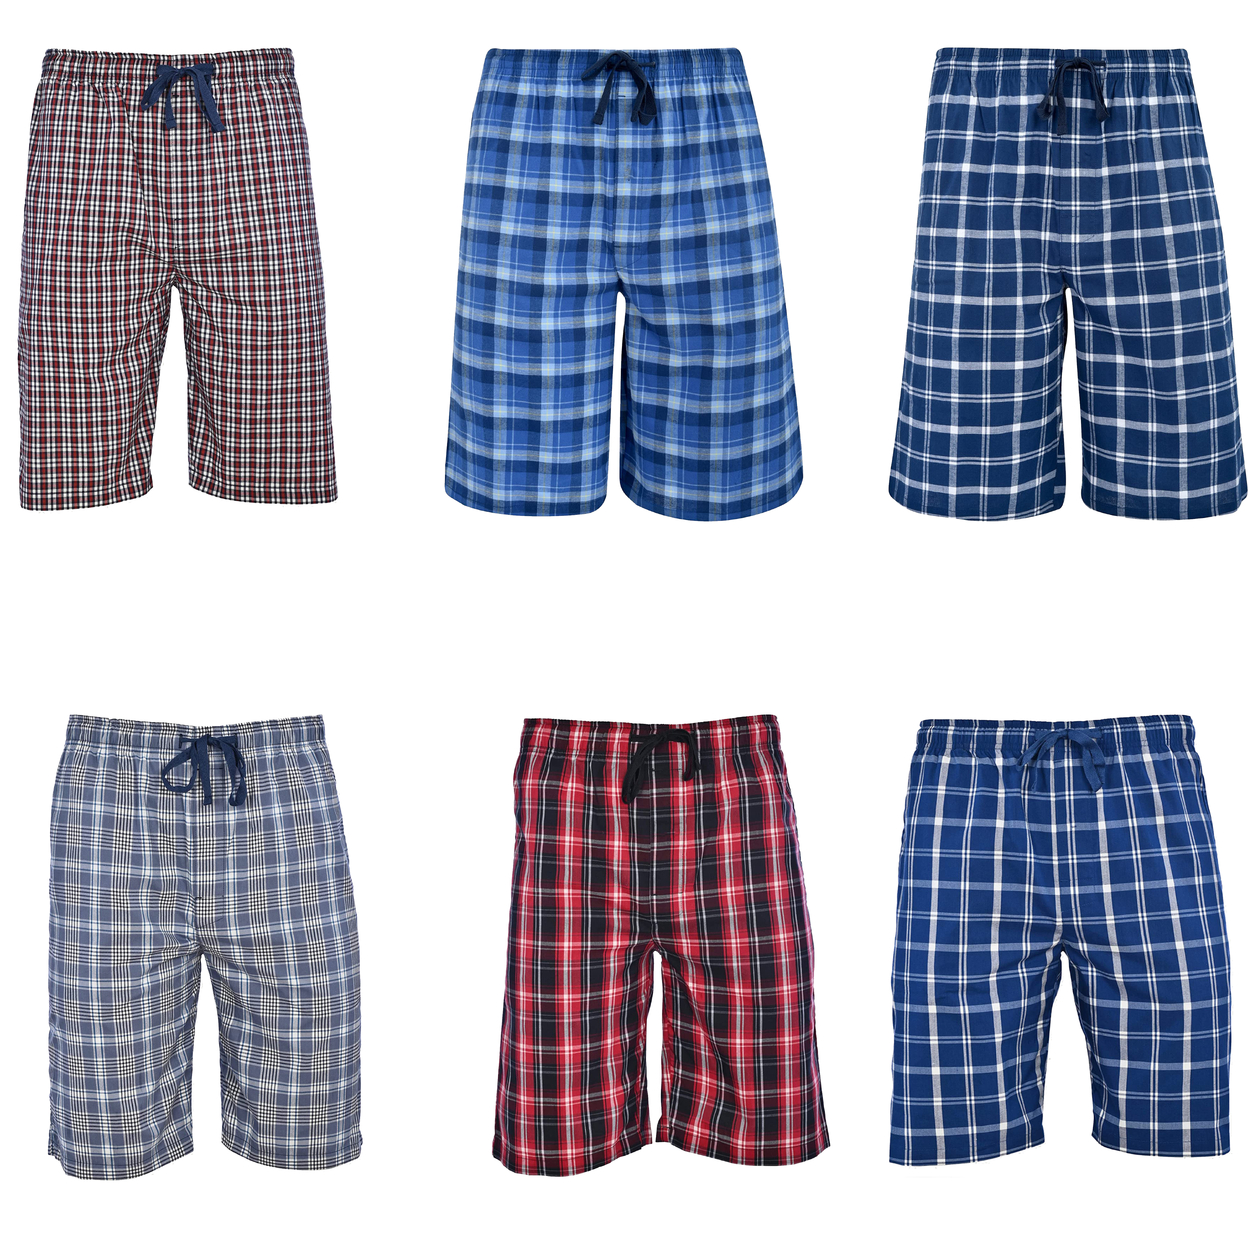 2-Pack: Men's Ultra Soft Plaid Lounge Pajama Sleep Wear Shorts - Black & Black, Small